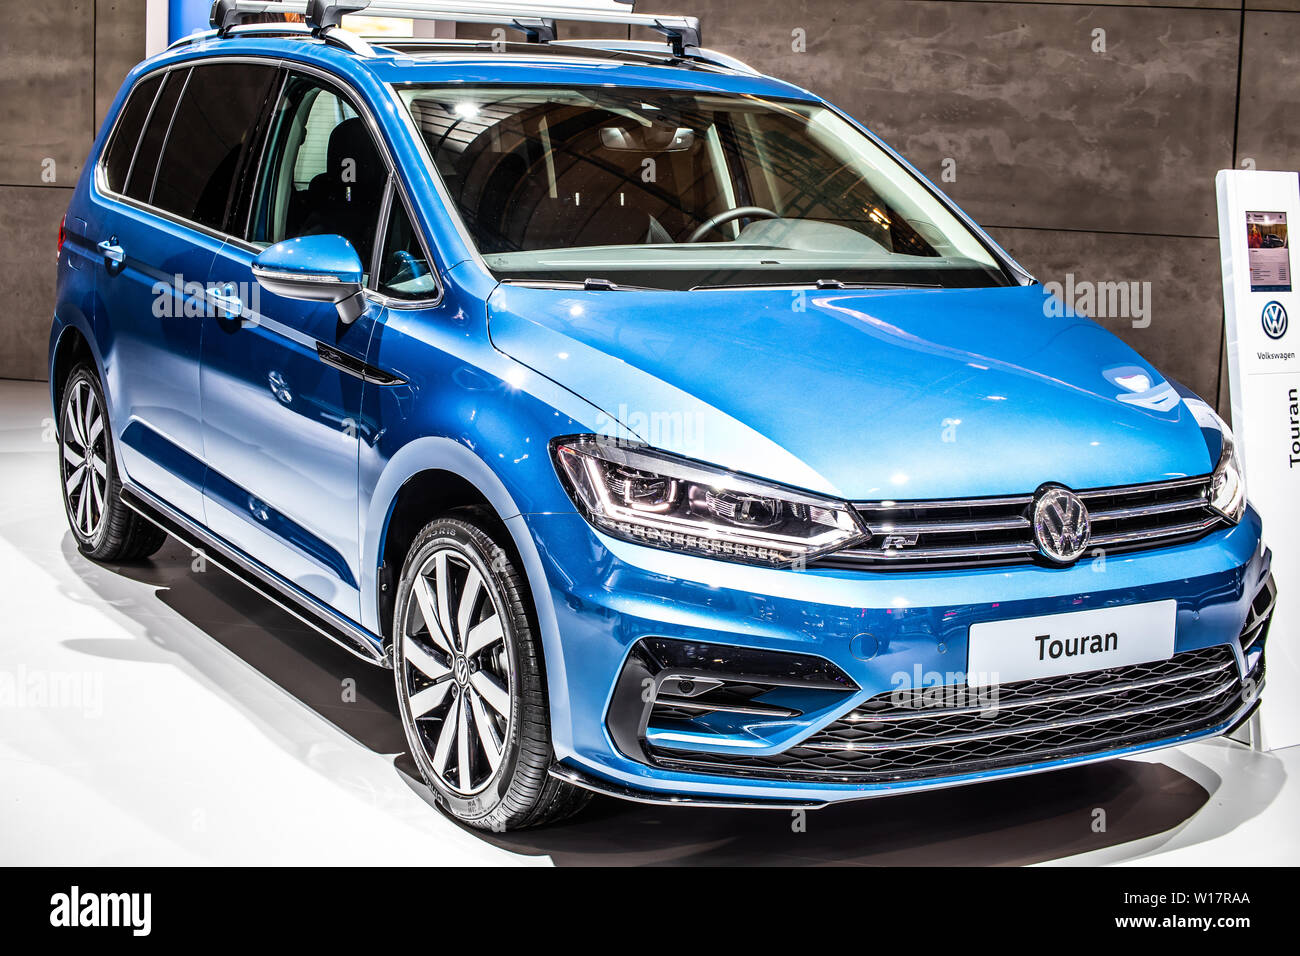 Brussels, Belgium, Jan 2019: Volkswagen VW Touran, Brussels Motor Show, 2nd gen MQB platform, compact MPV multi-purpose vehicle produced by Volkswagen Stock Photo